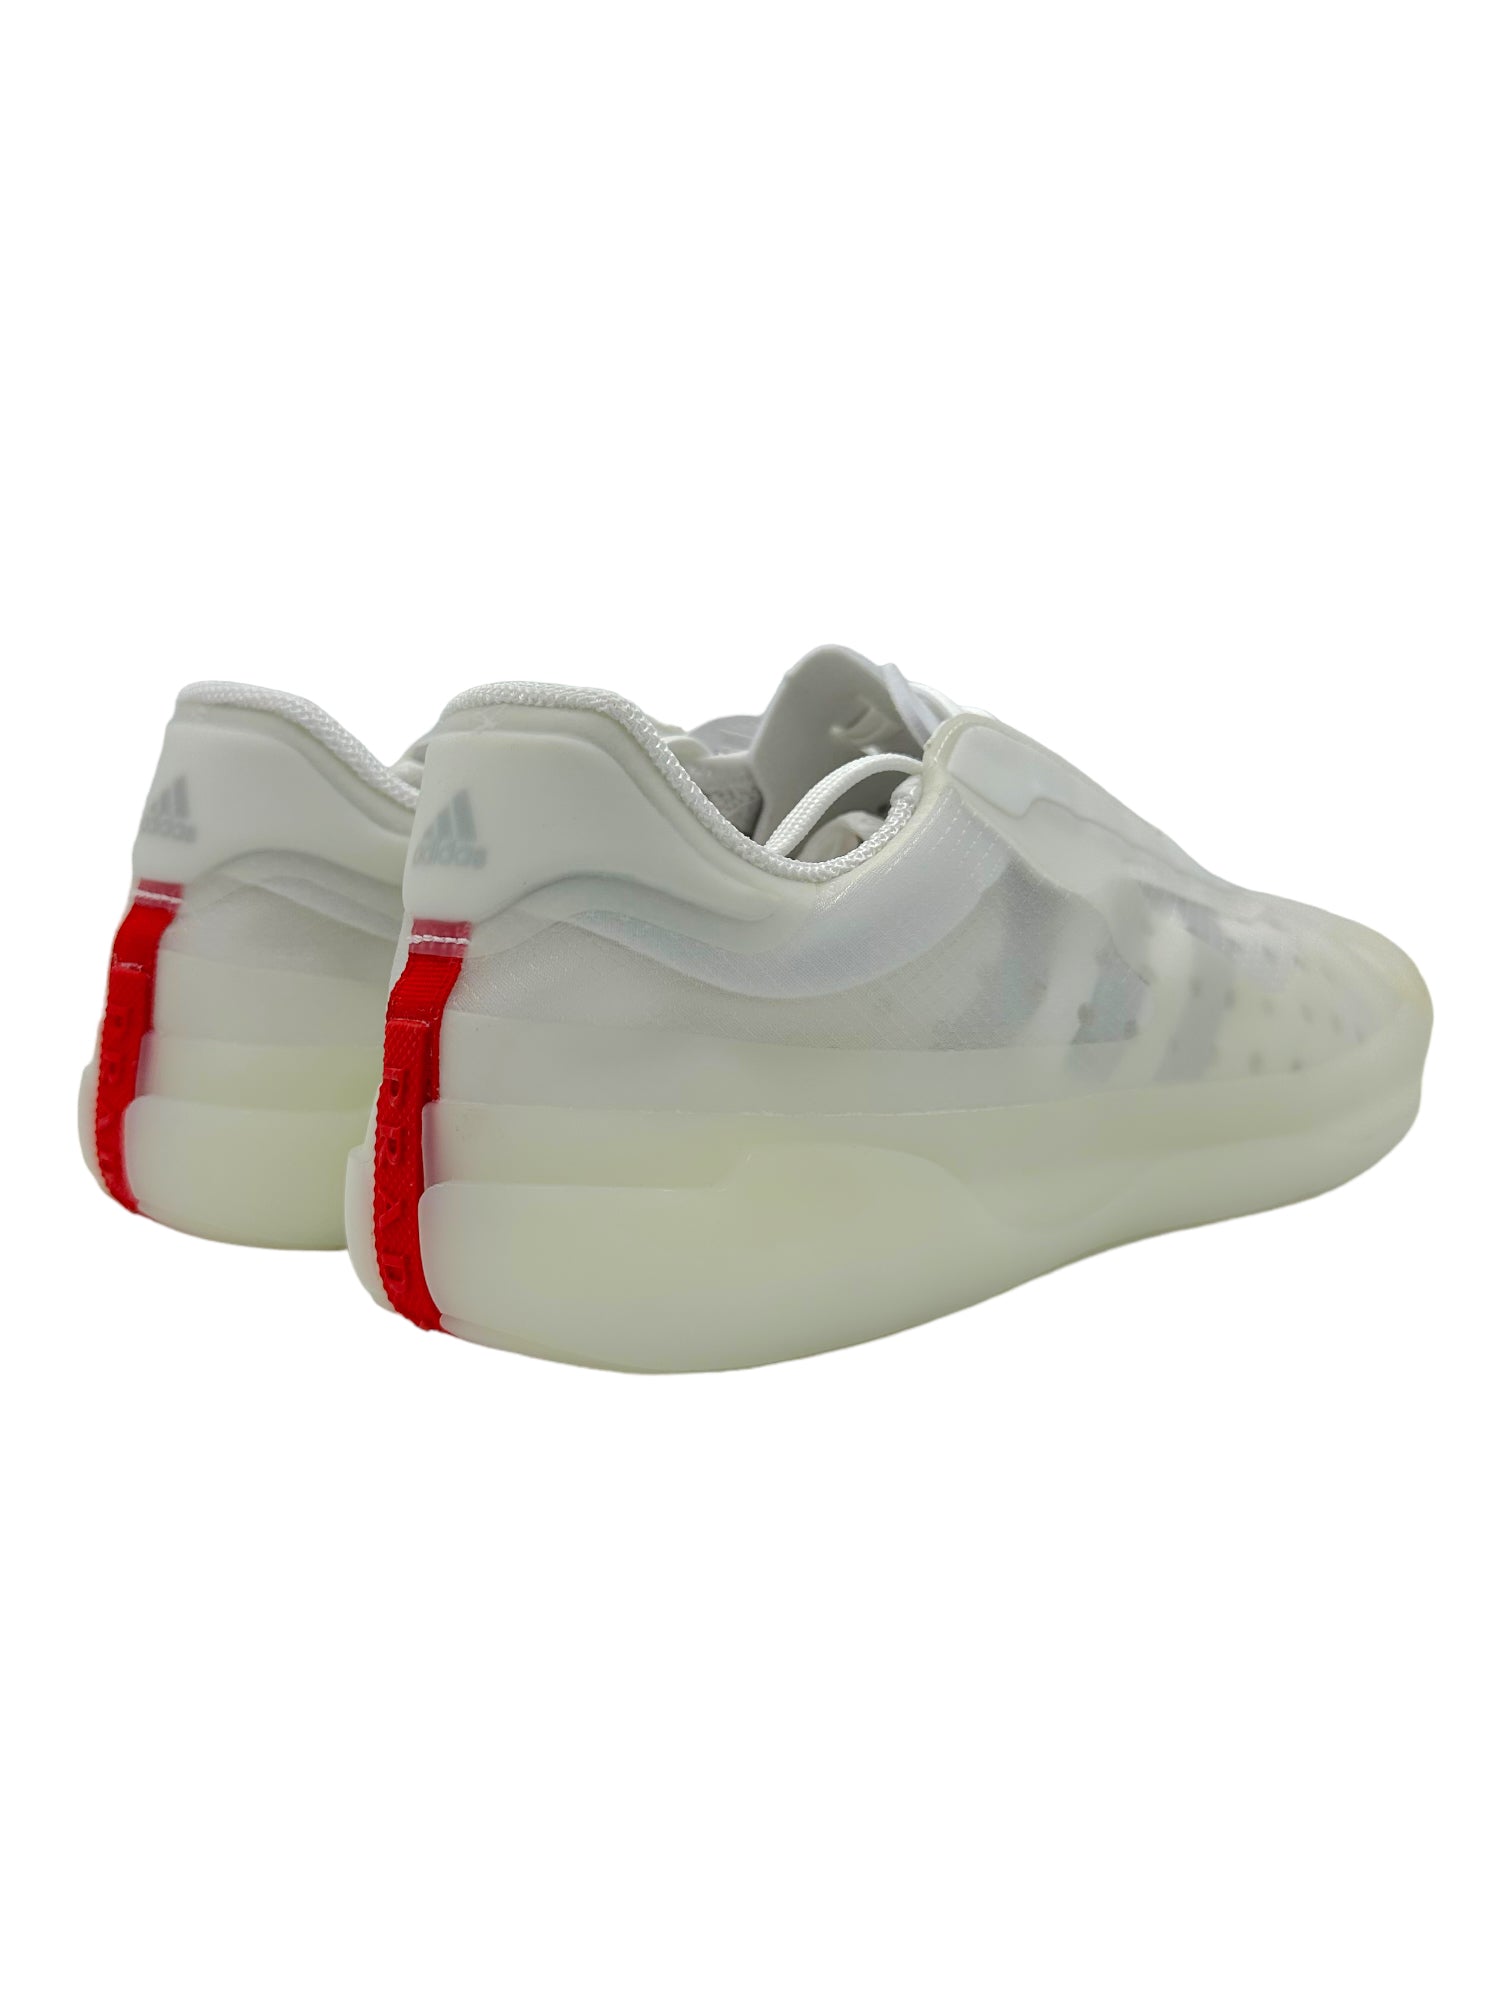 Adidas Prada X A+P Luna Rossa 21 'Cloud White' Sneakers